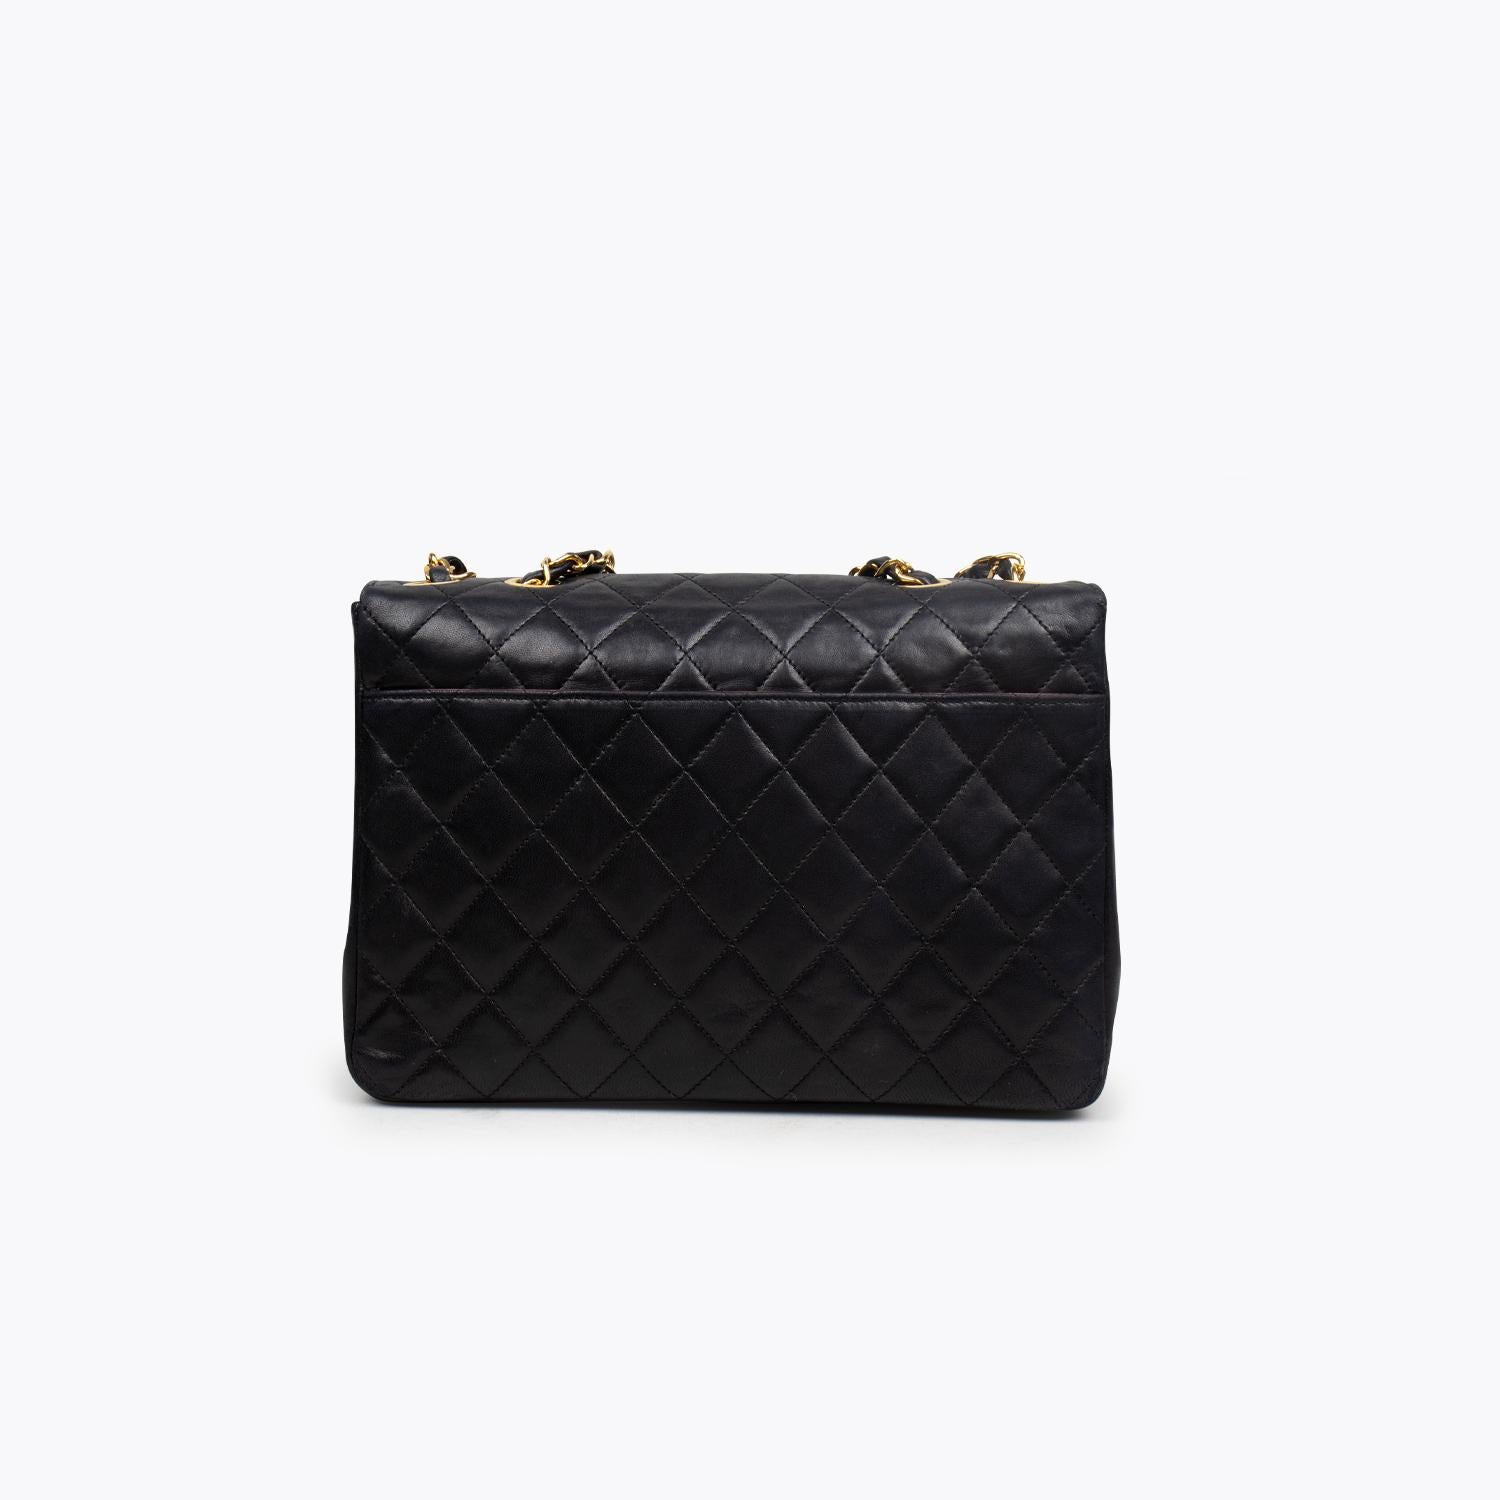 Black Coco Chanel Classic Single Flap Bag